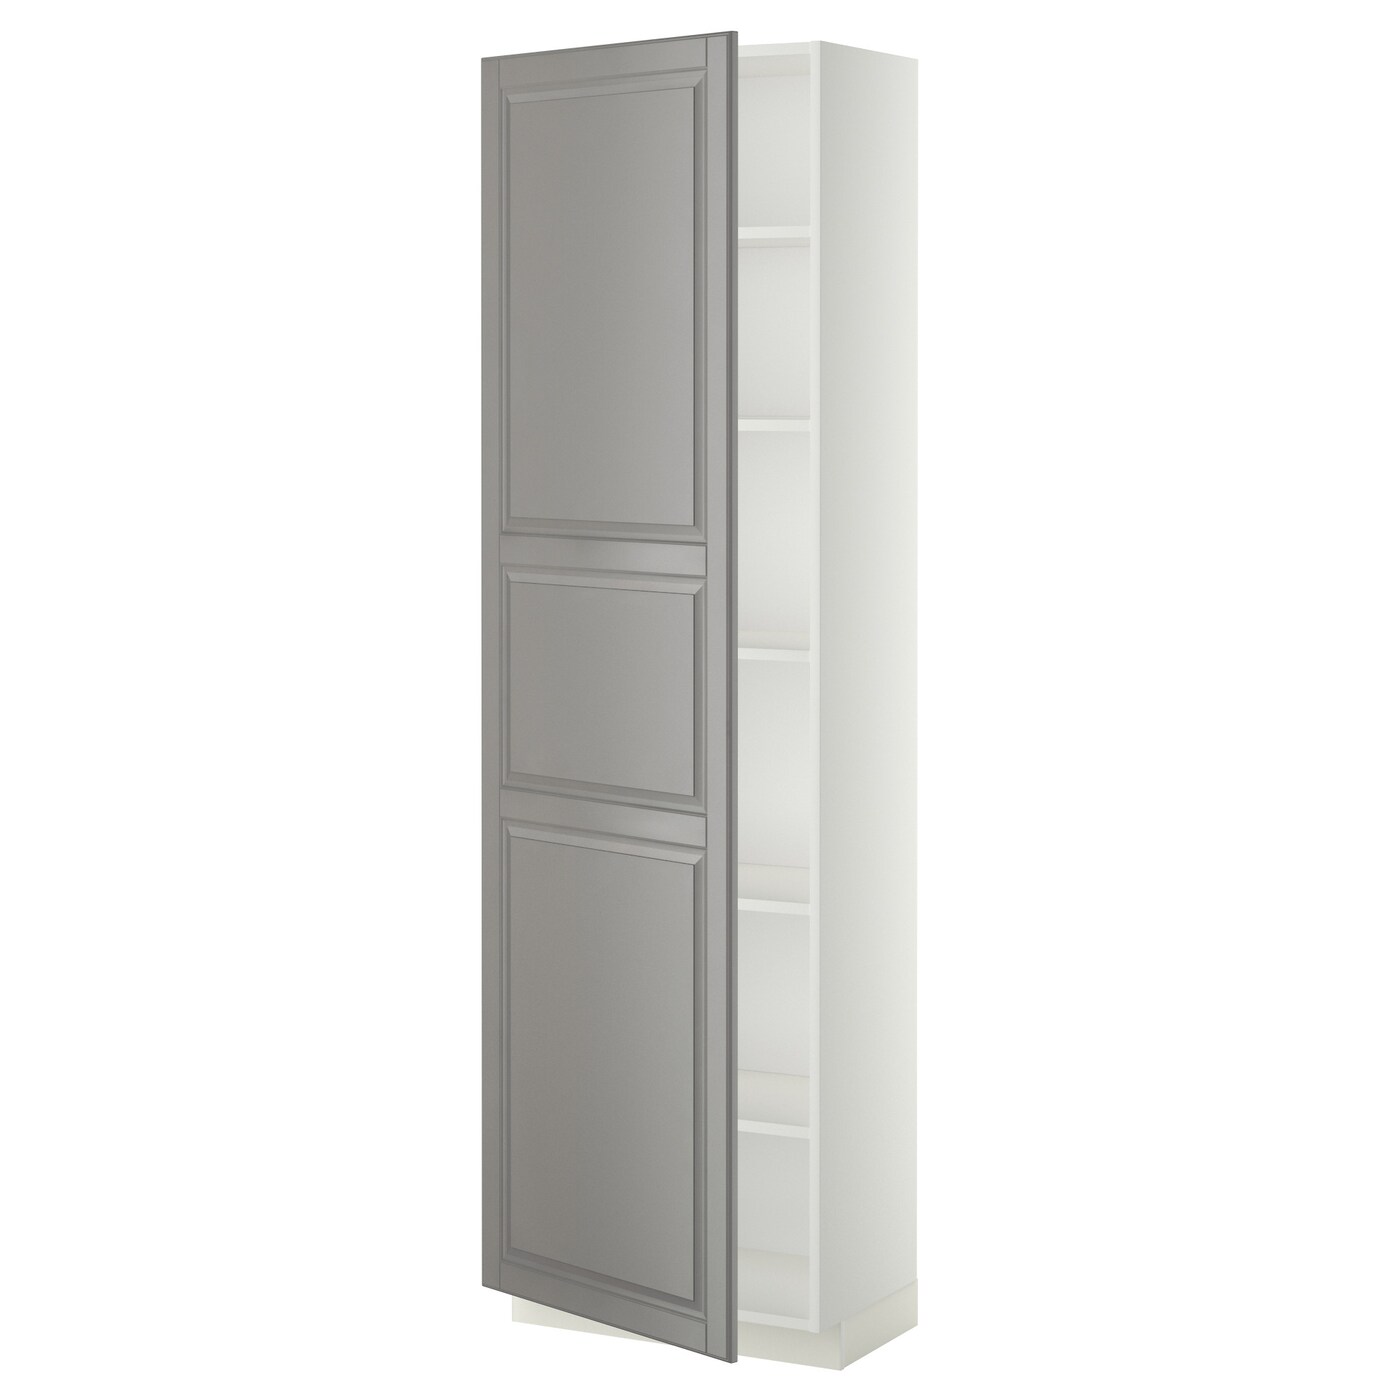 Высокий кухонный шкаф с полками - IKEA METOD/МЕТОД ИКЕА, 200х37х60 см, белый/серый